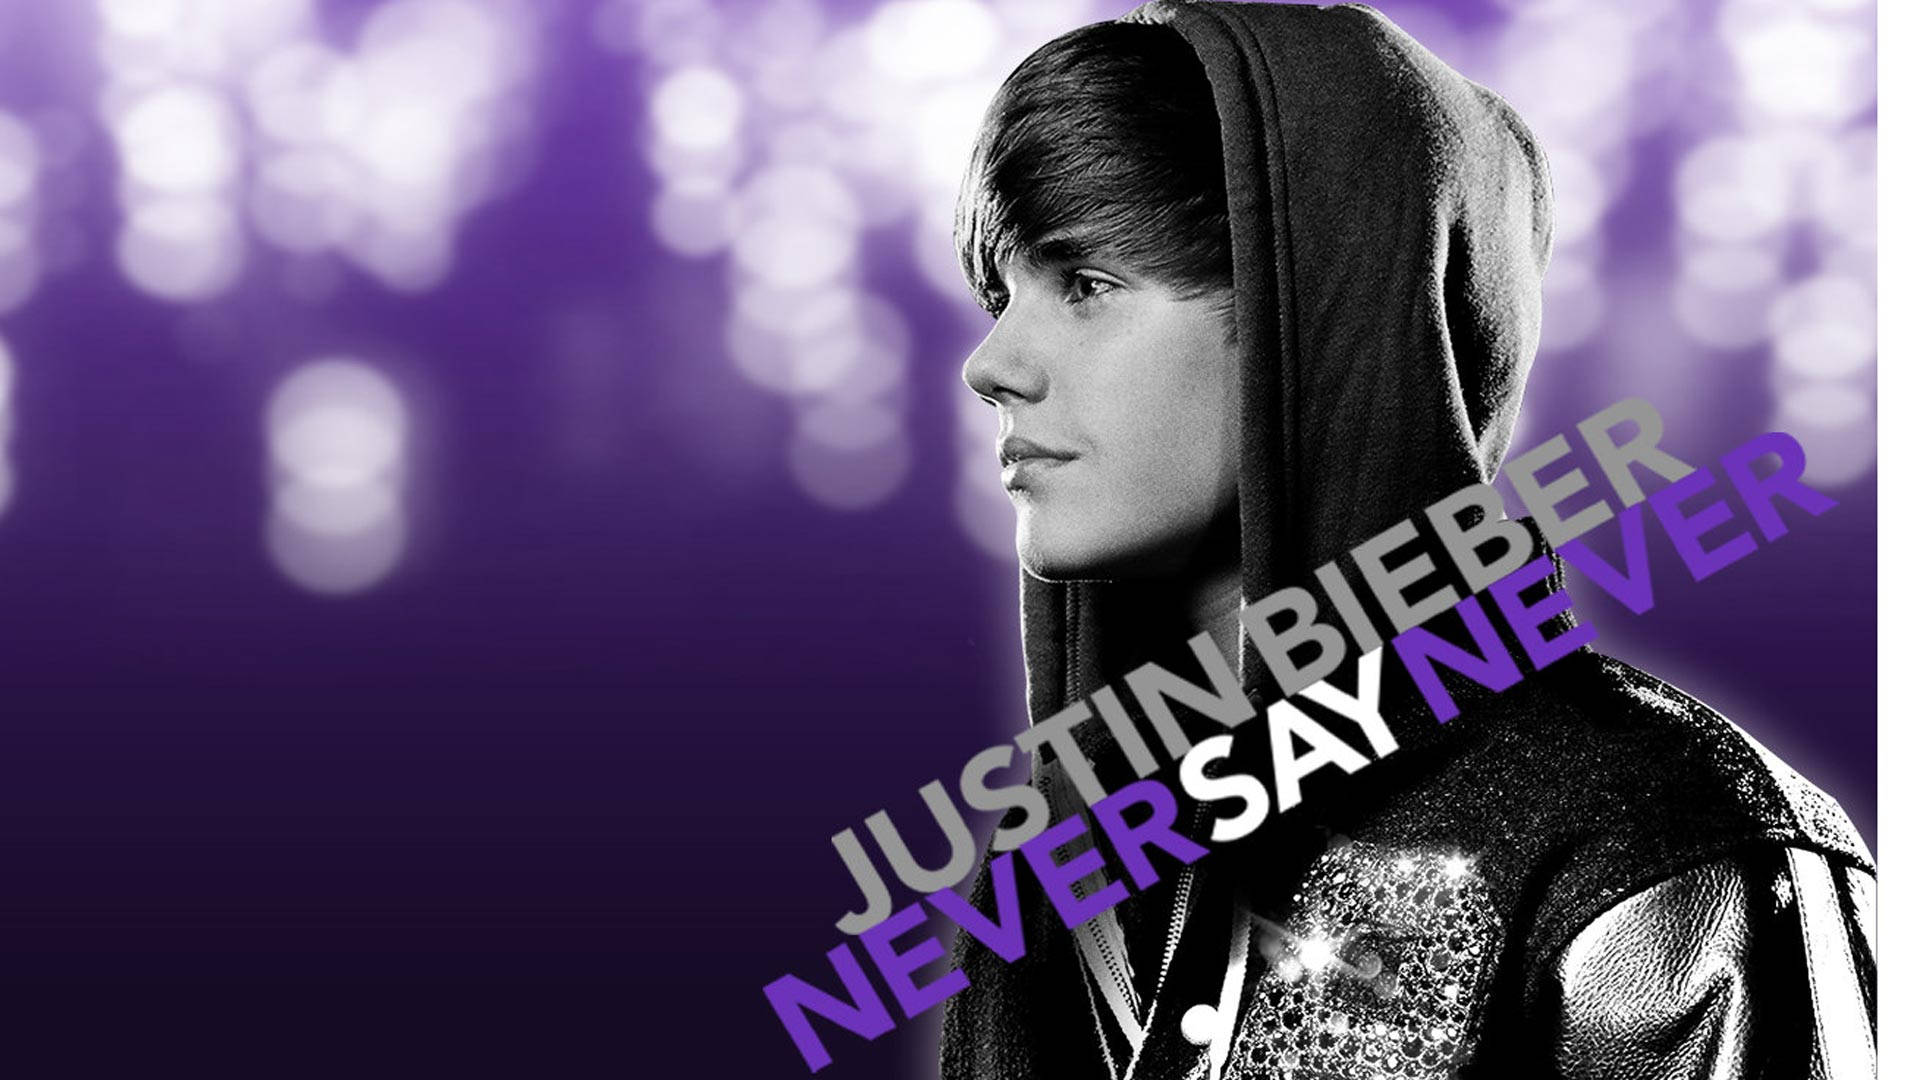 Justin Bieber Never Say Never Poster Background